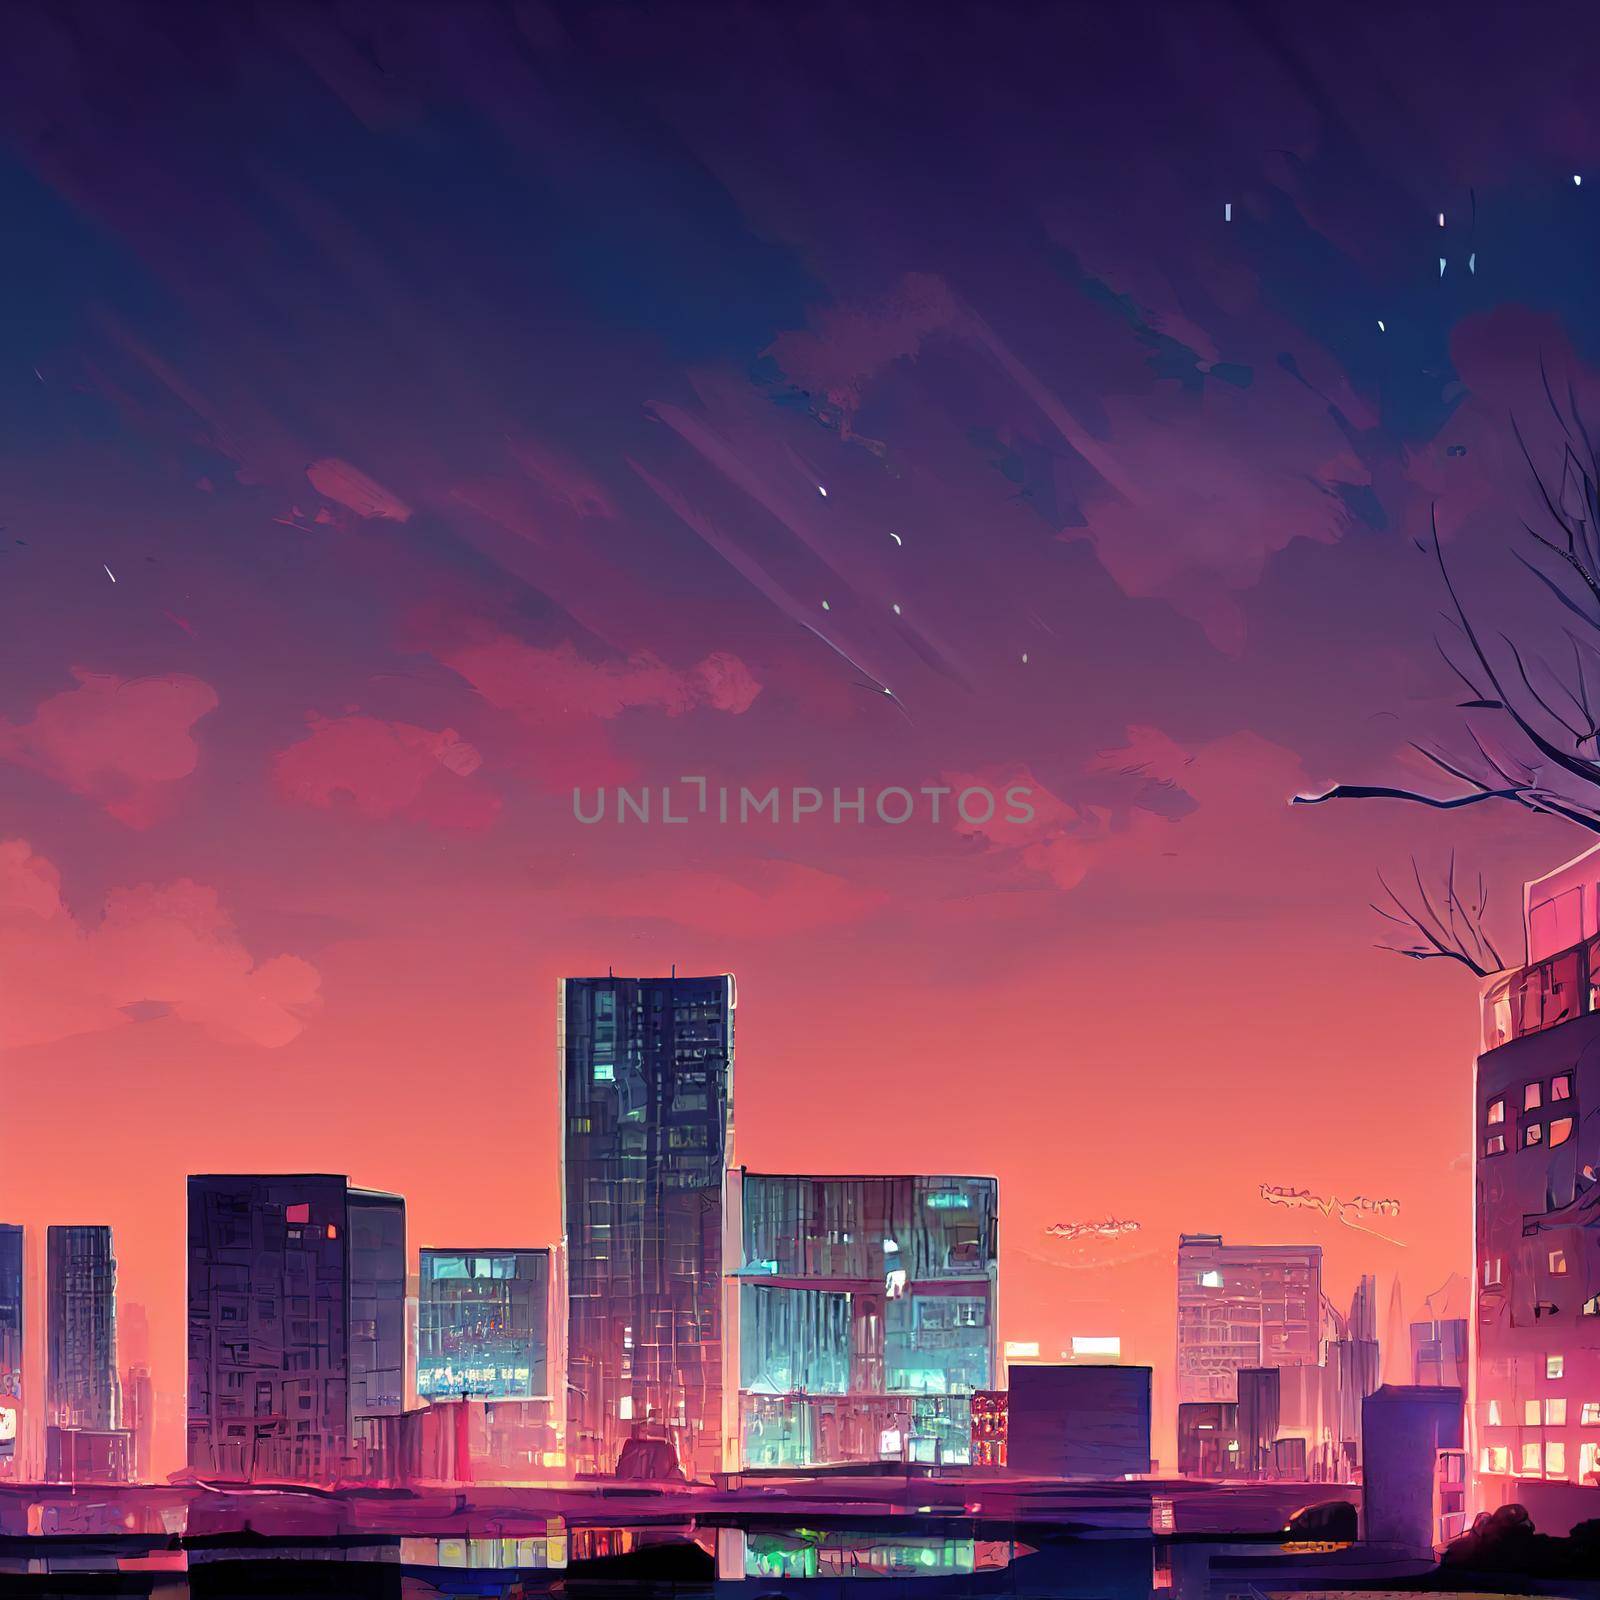 anime style city . High quality 3d illustration